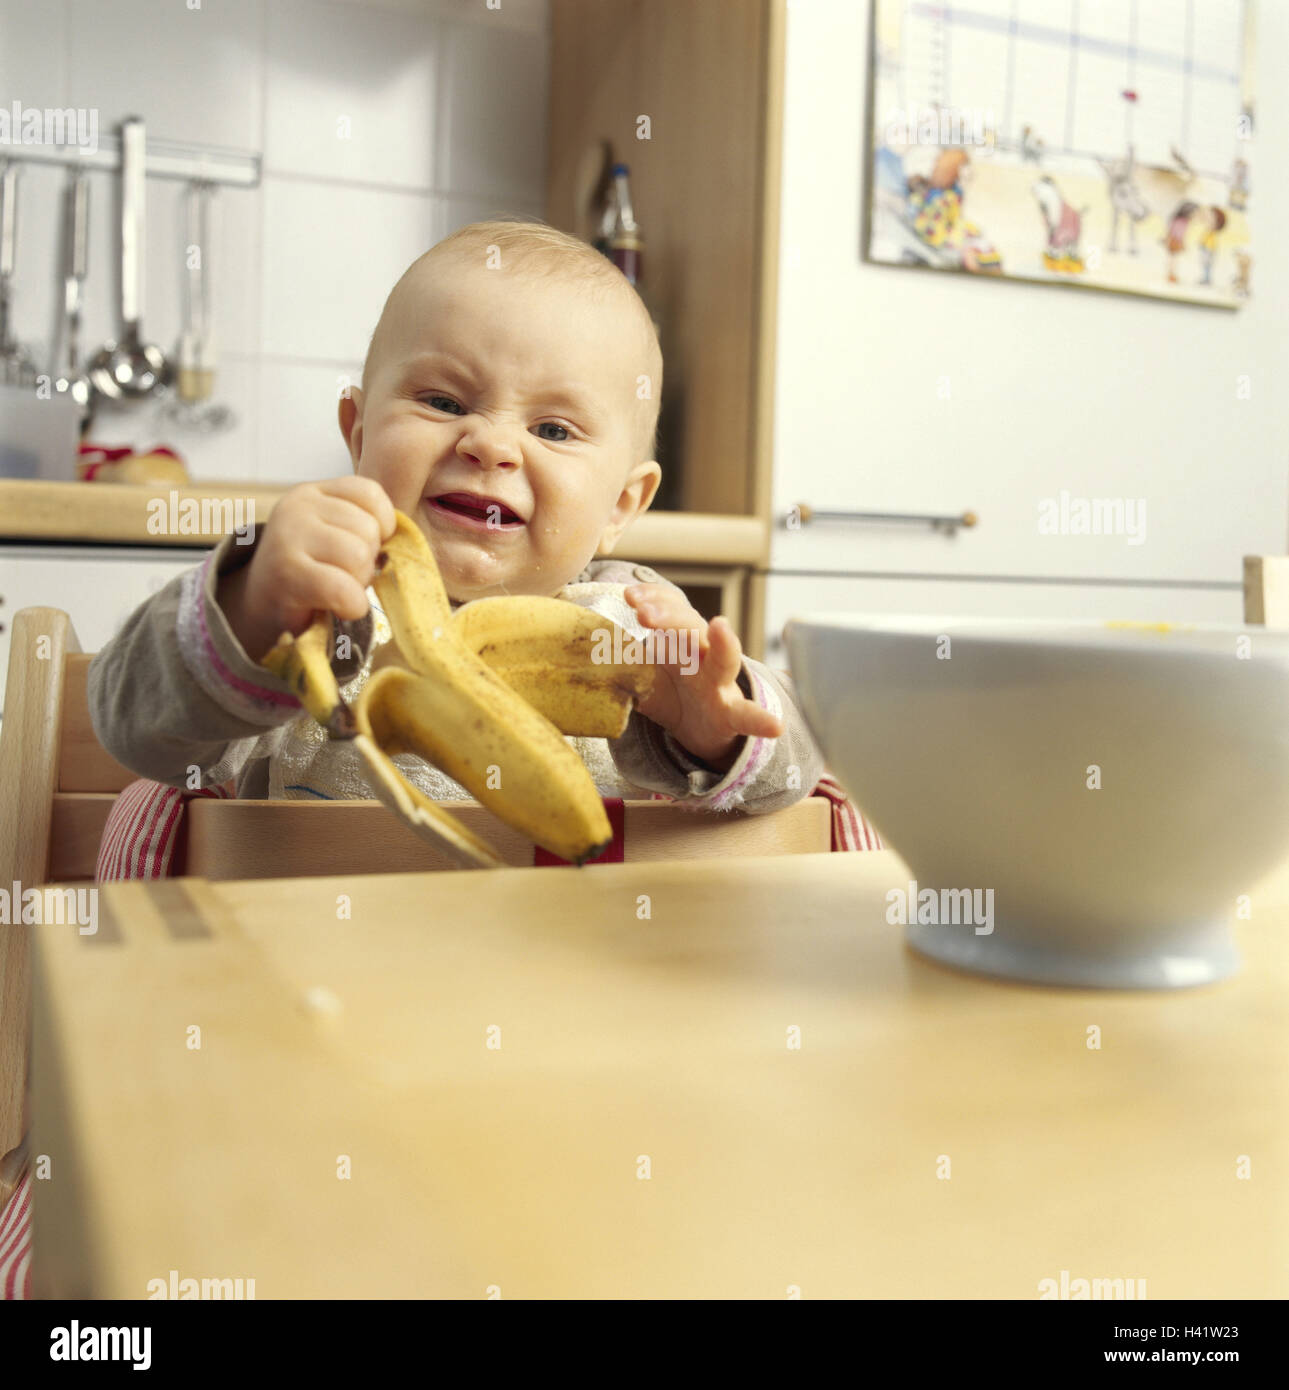 https://c8.alamy.com/comp/H41W23/baby-child-chair-banana-eats-child-0-6-months-toddler-sits-lchtzchen-H41W23.jpg